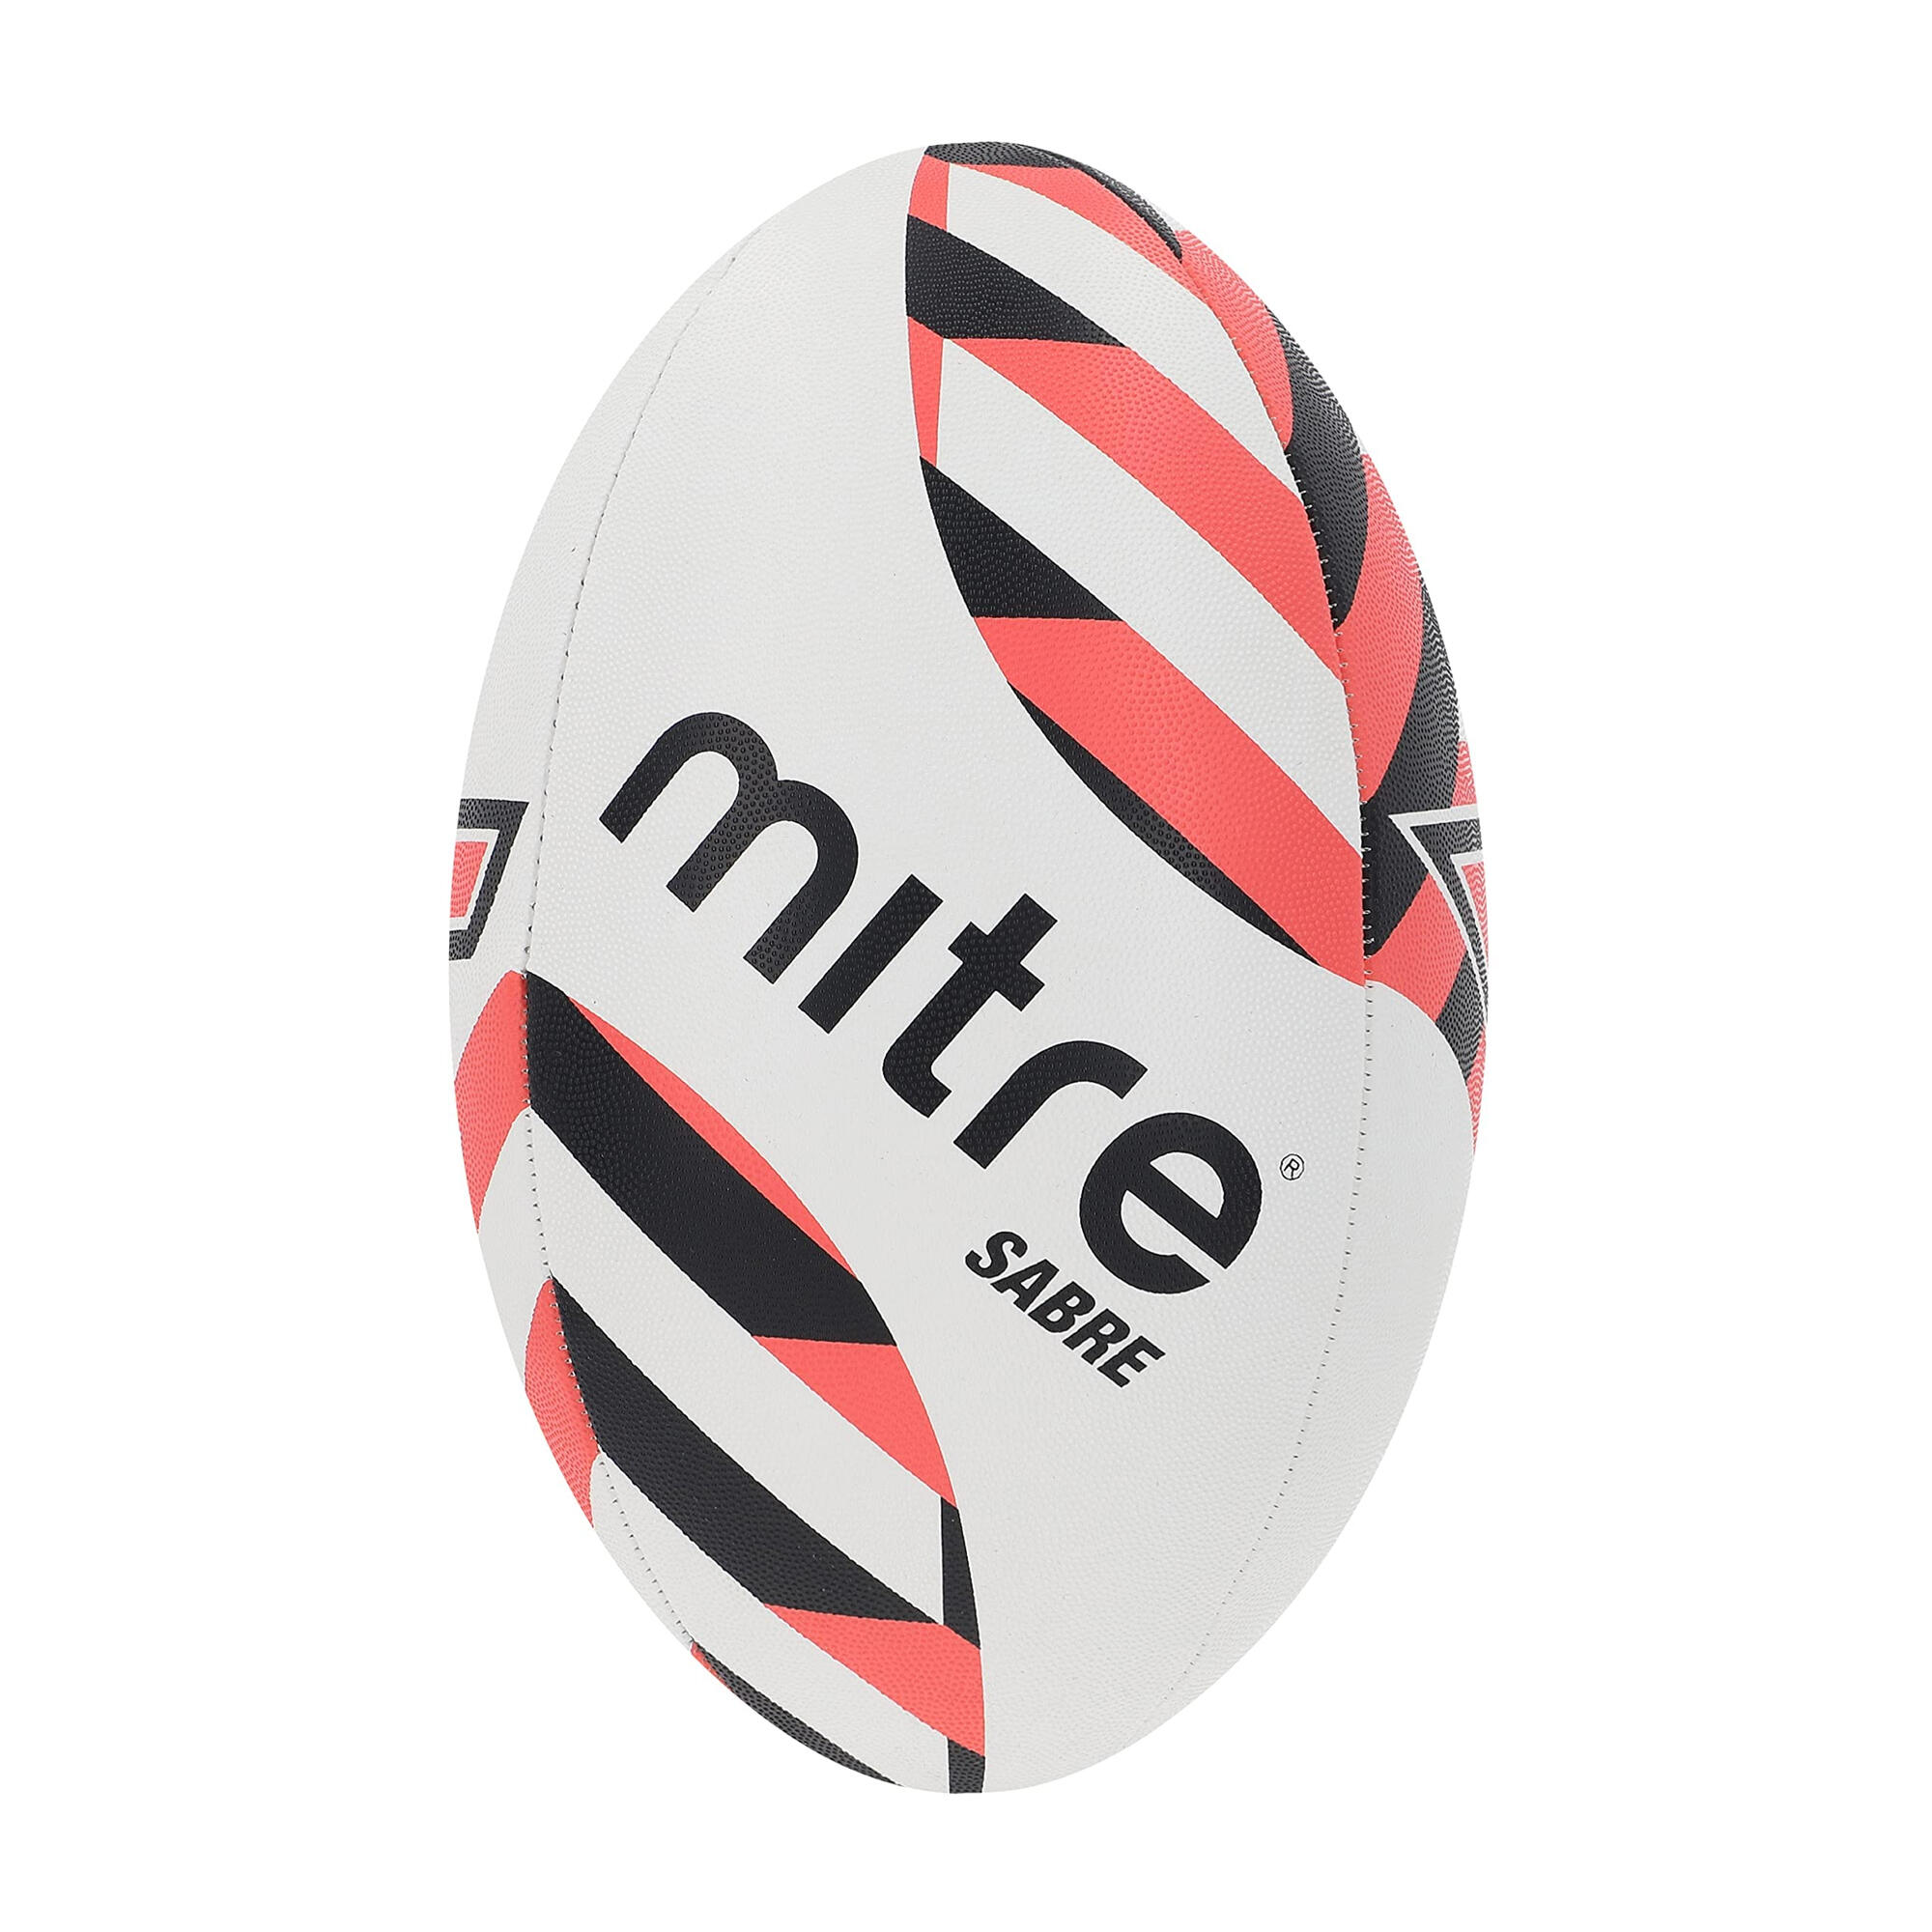 MITRE Sabre Rugby Ball (White/Black/Orange)